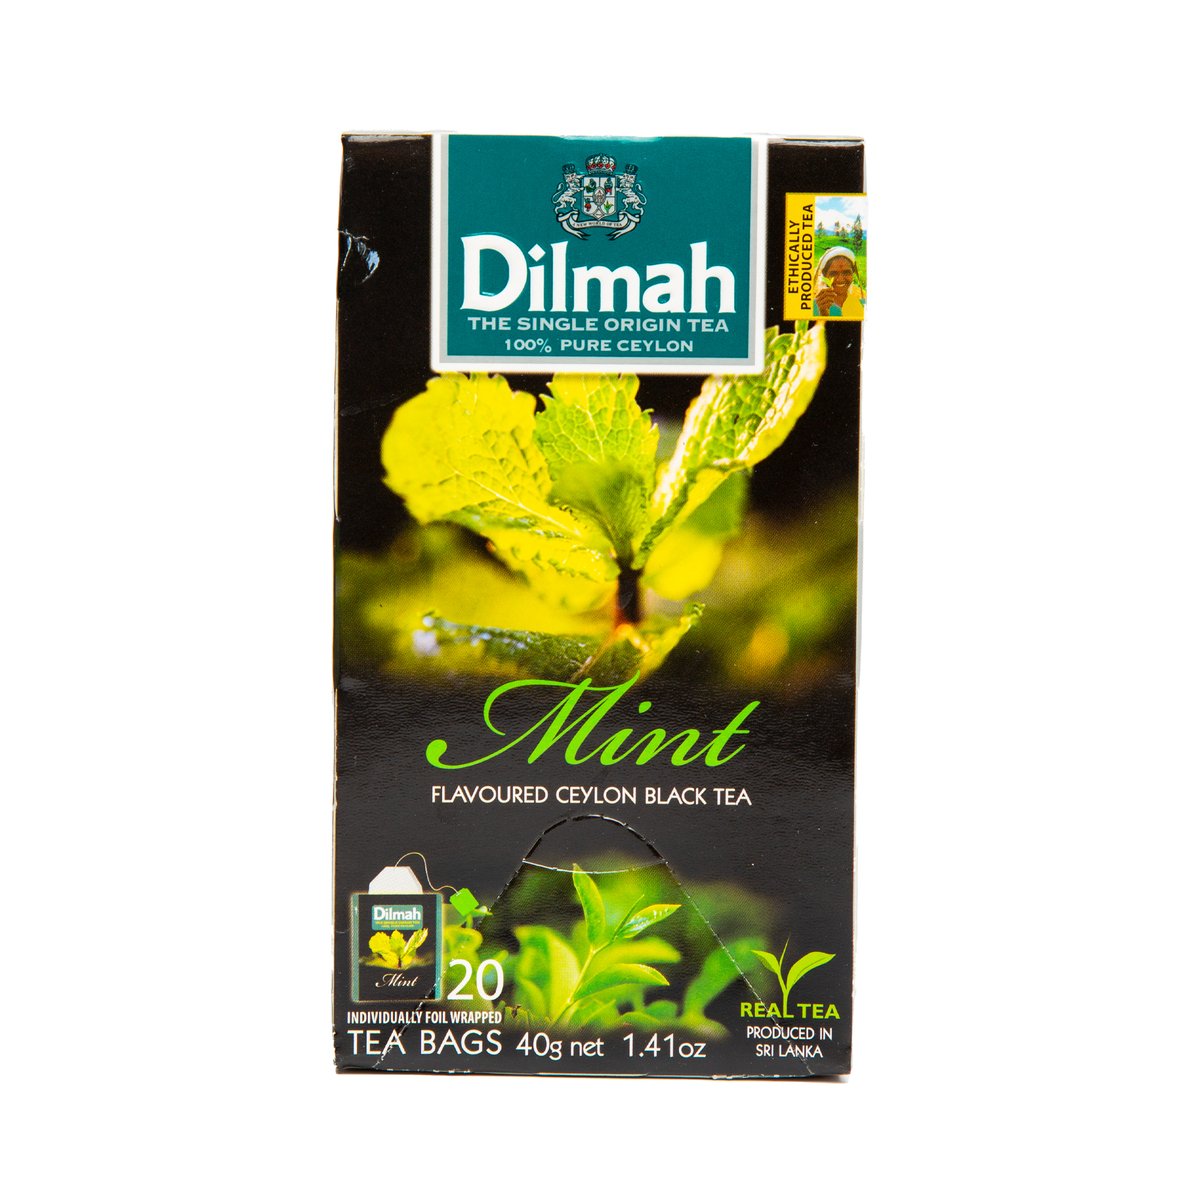 Dilmah Mint Flavoured Ceylon Black Tea 20 Teabags 40 g